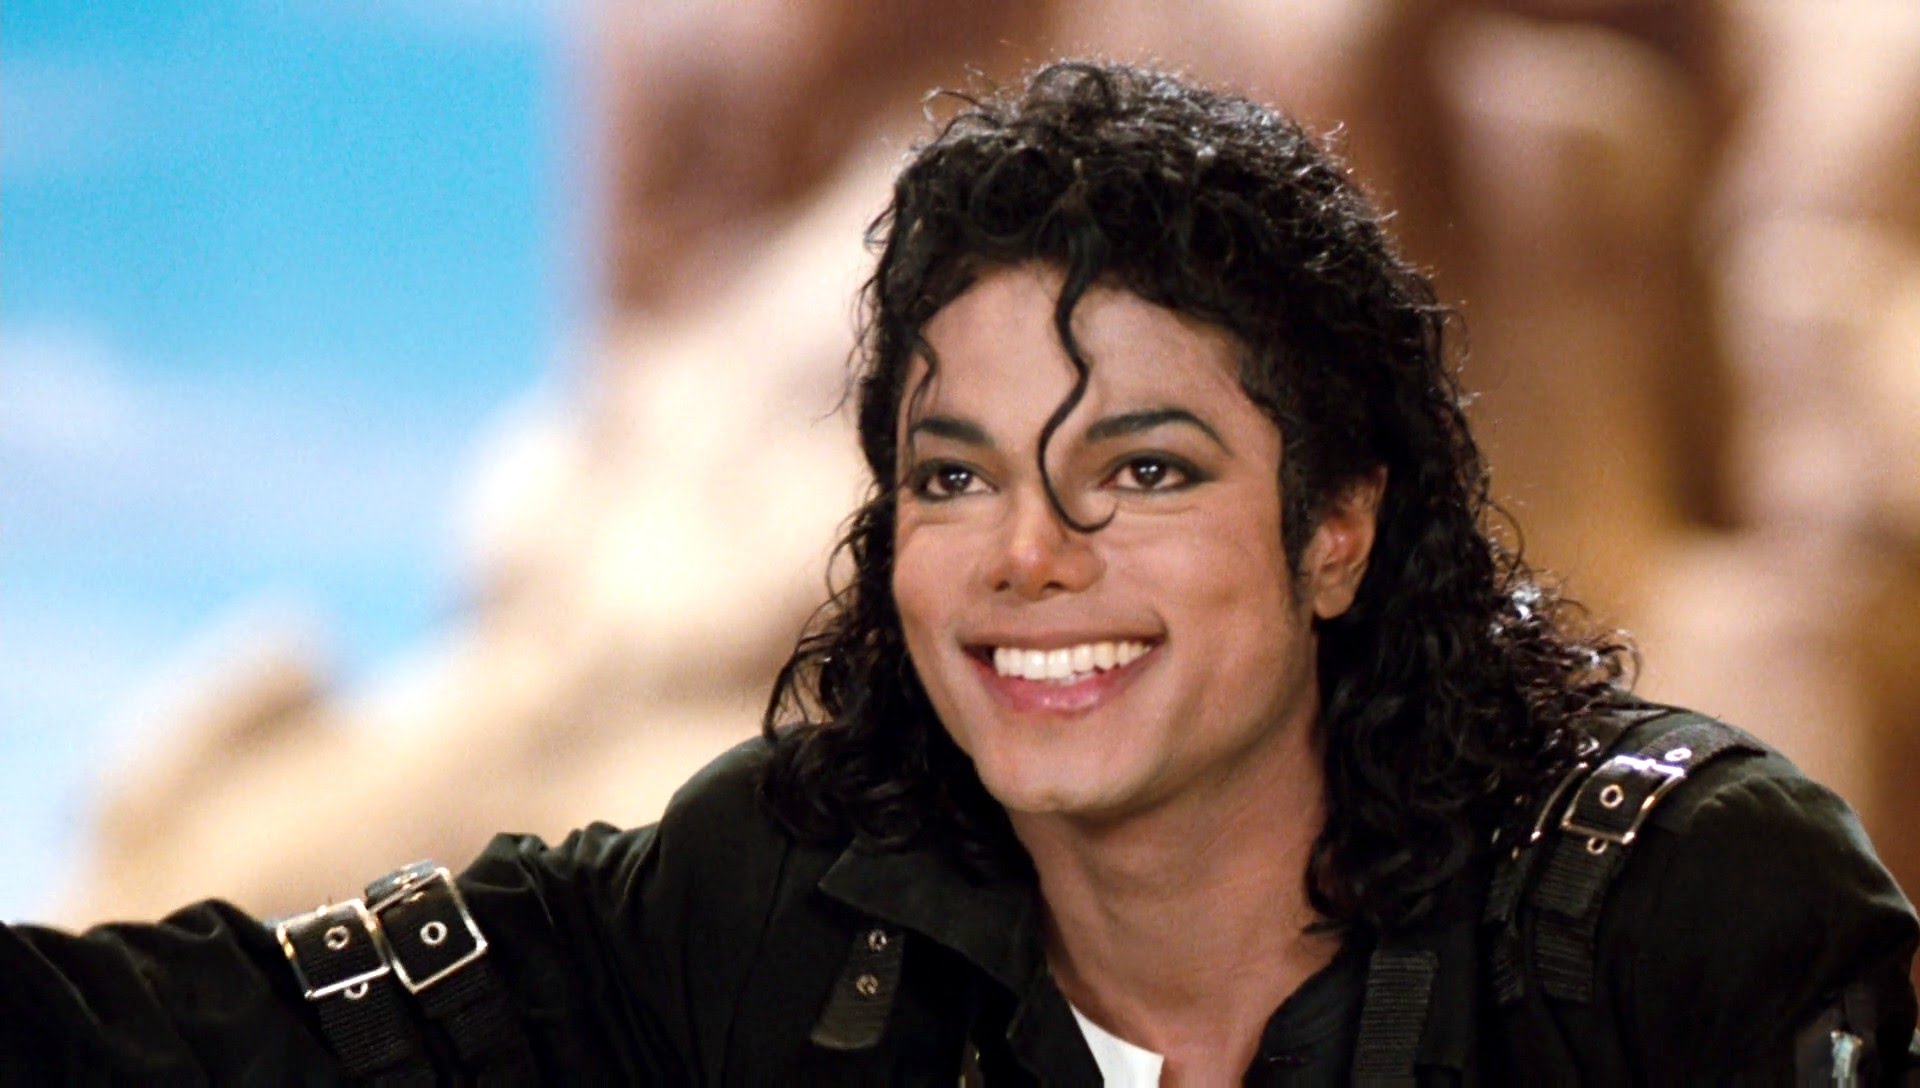  Biografi om Michael Jackson